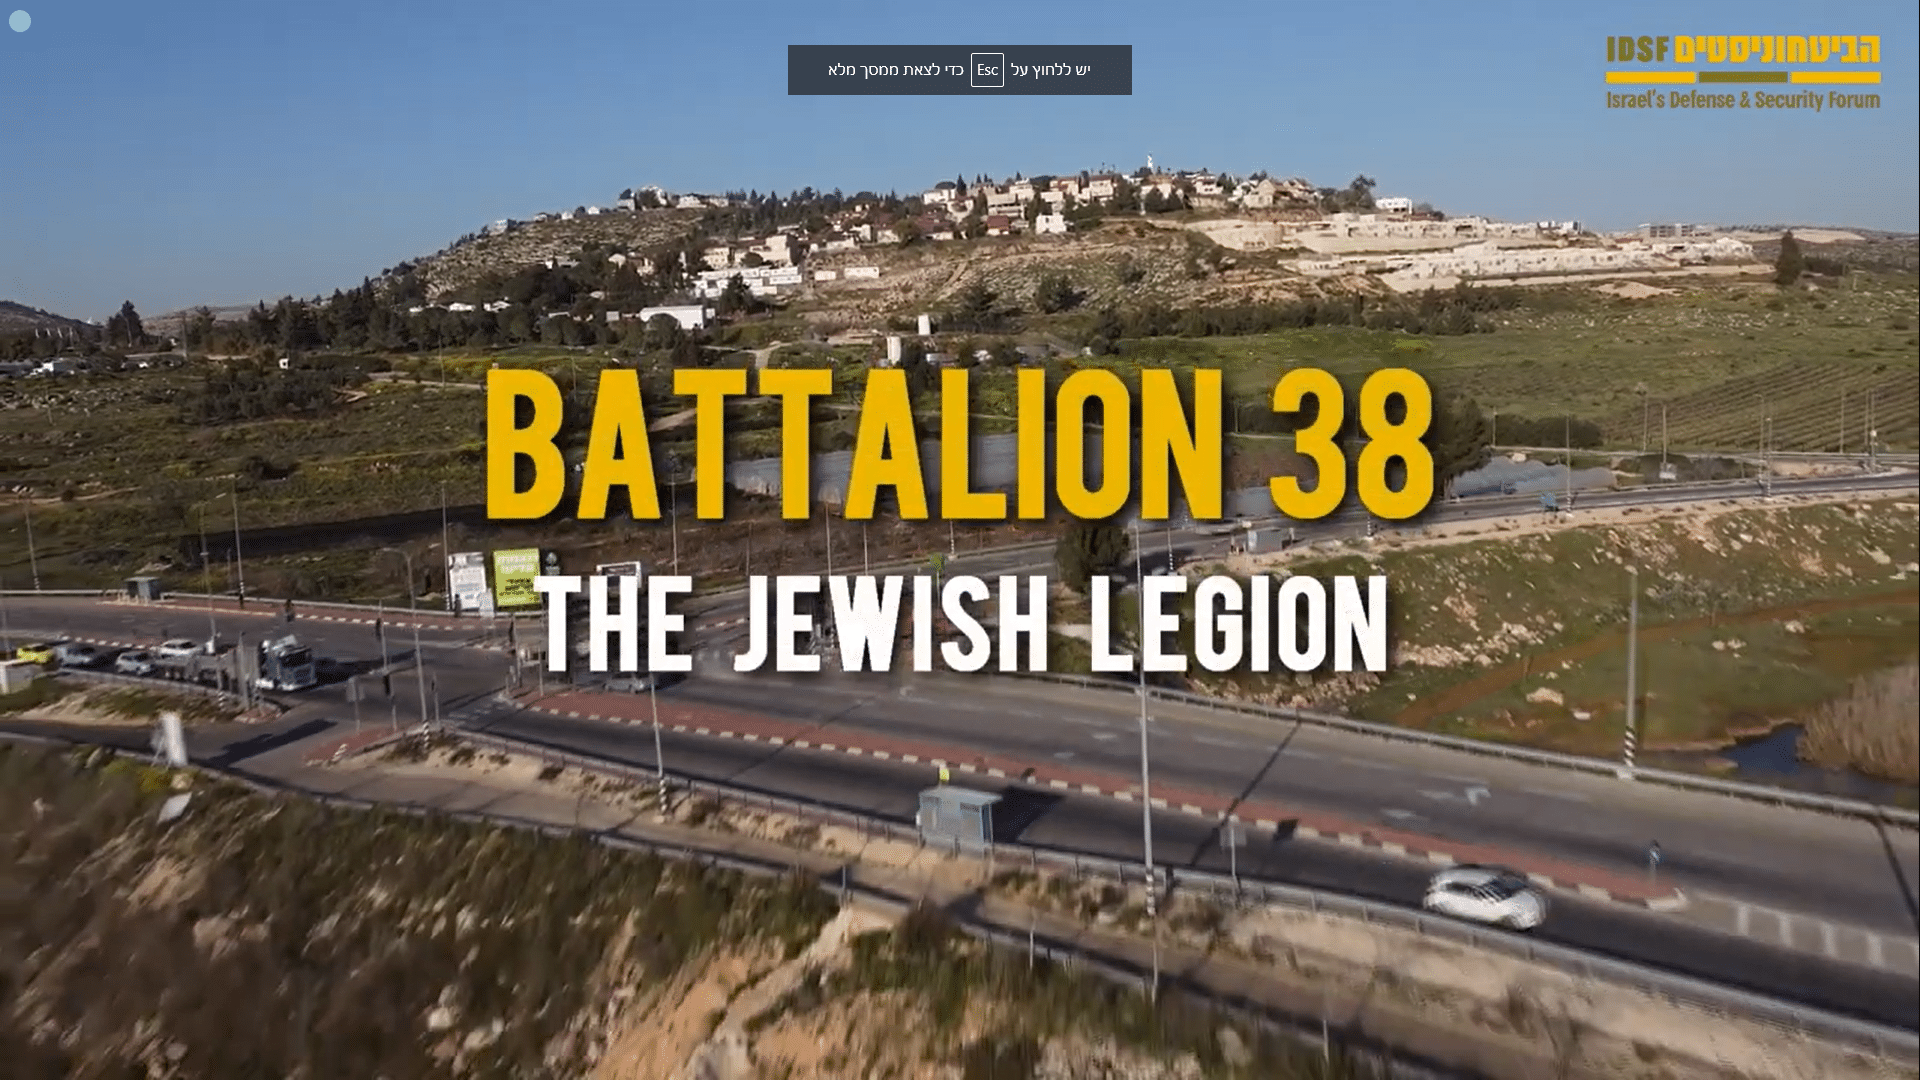 The Jewish Battalion